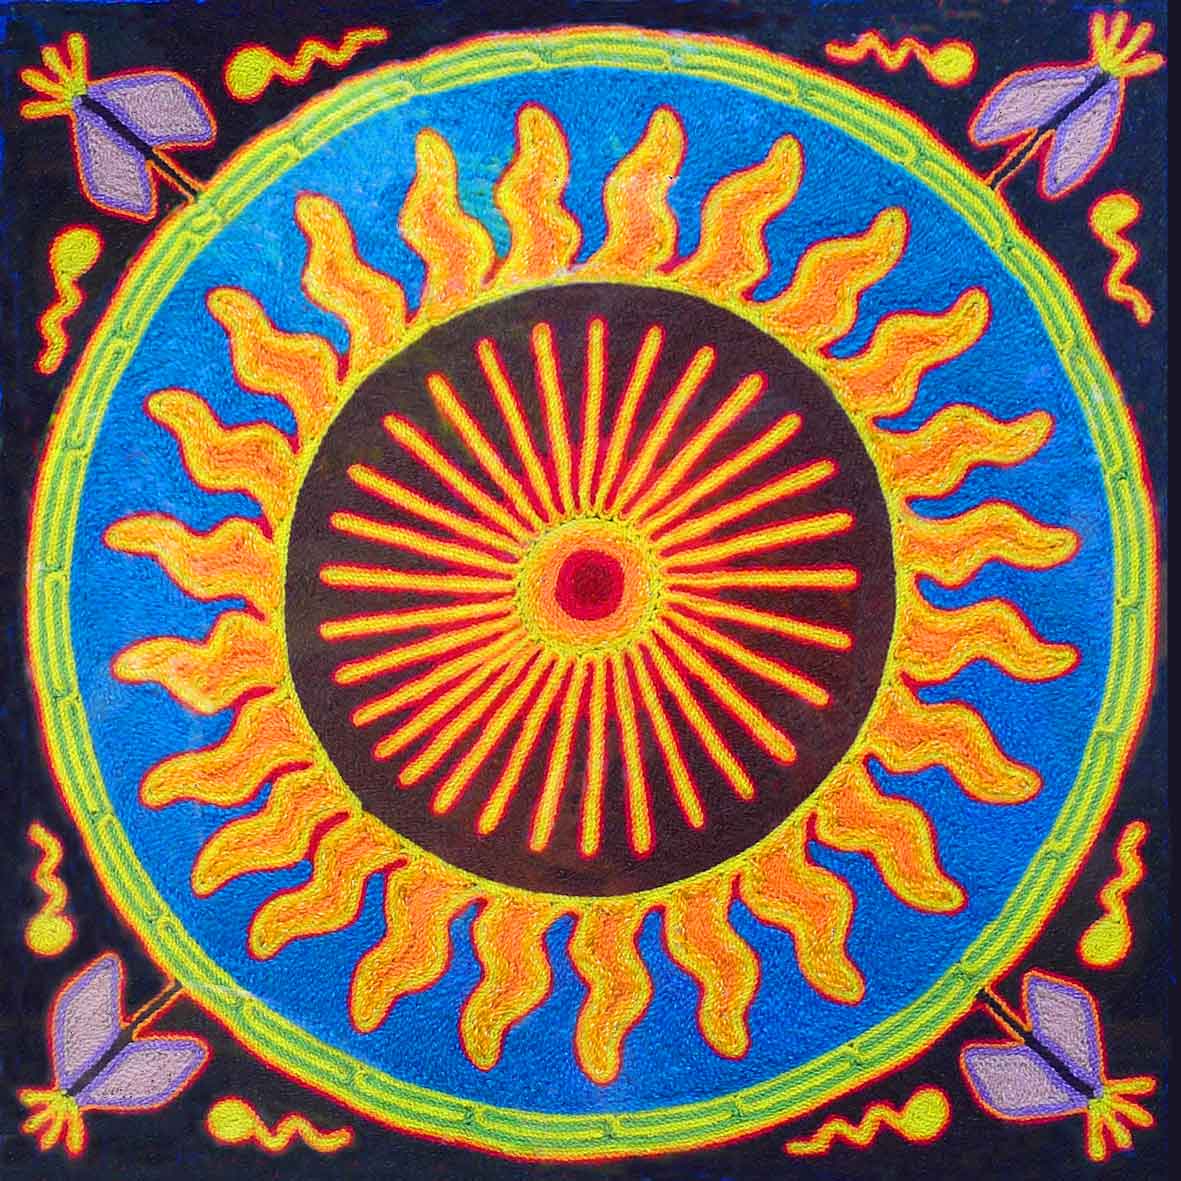 Huichol sun for sign yarn art at the Octopus's Garden